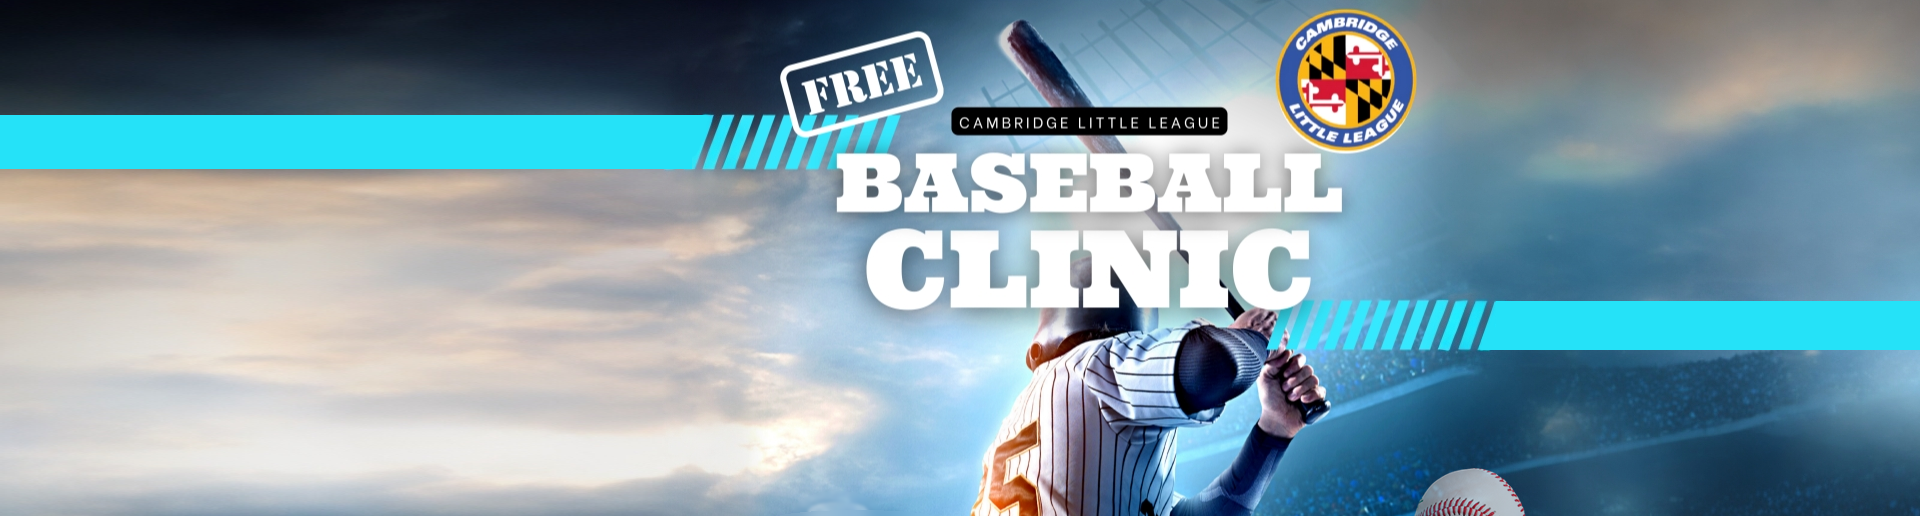 FREE Winter Baseball Clinic